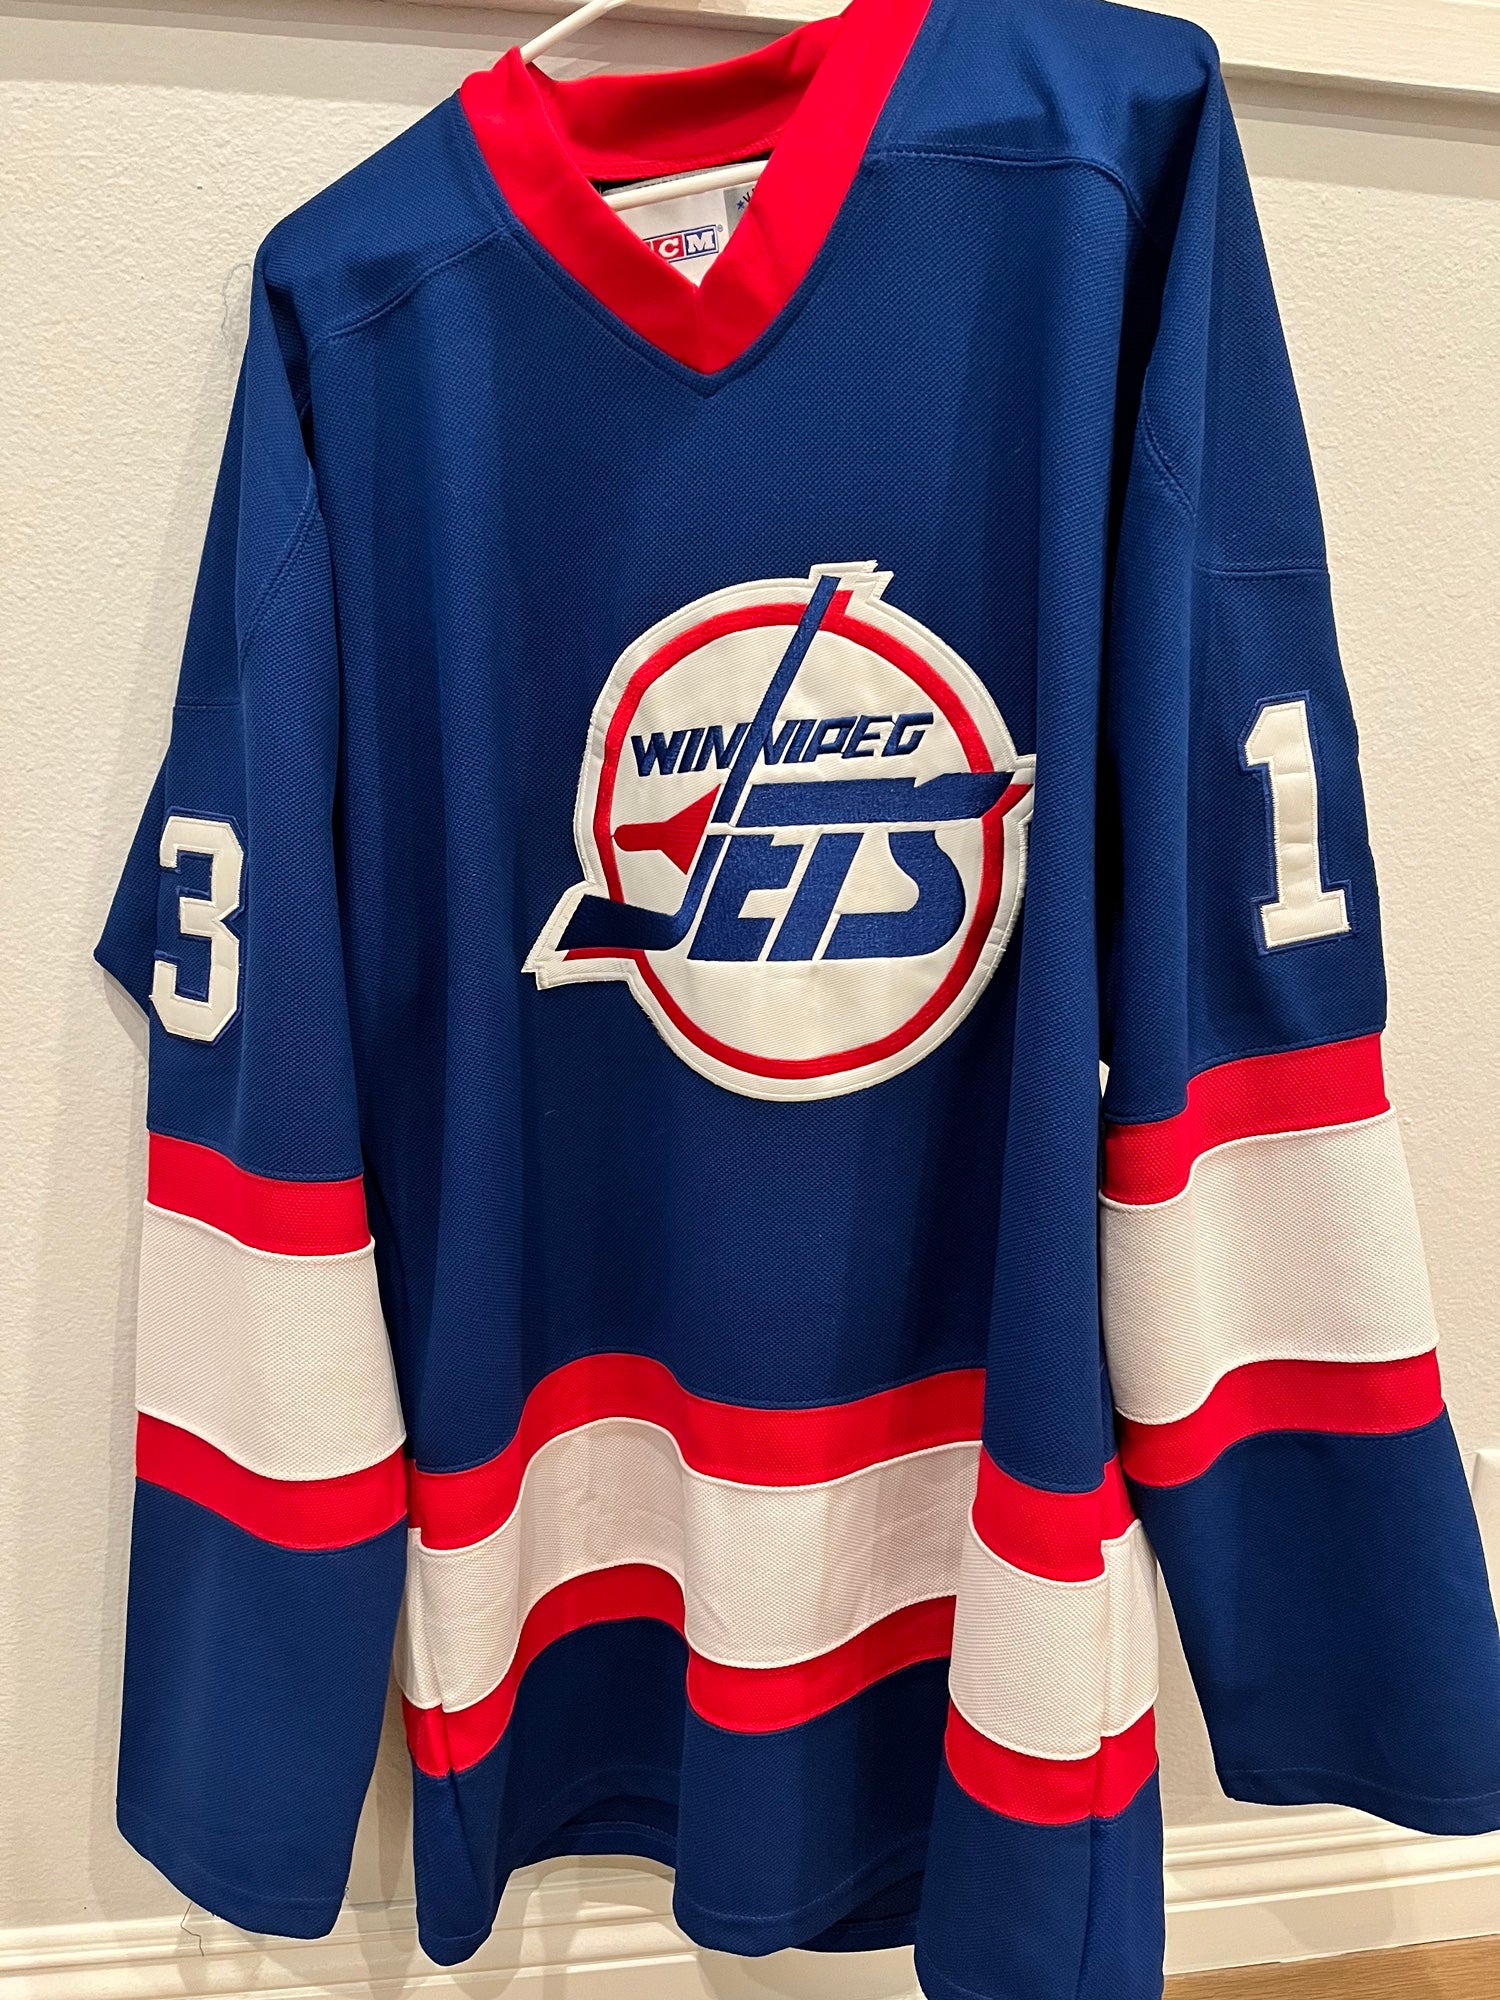 CCM Winnipeg Jets Jersey NHL Fan Apparel & Souvenirs for sale